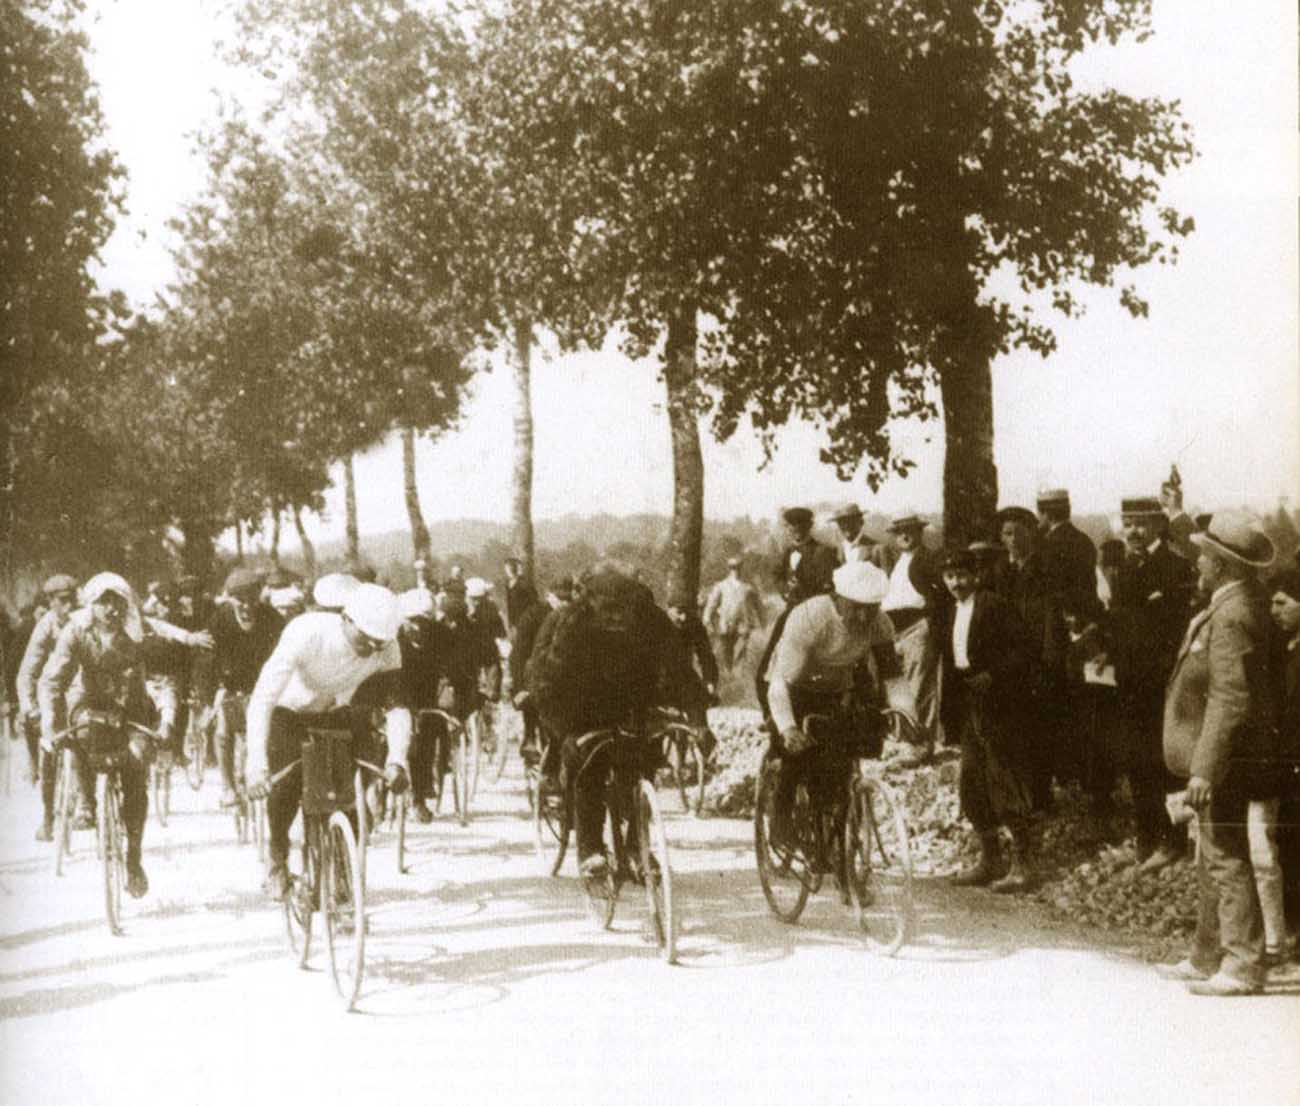 1903 tour de france photos